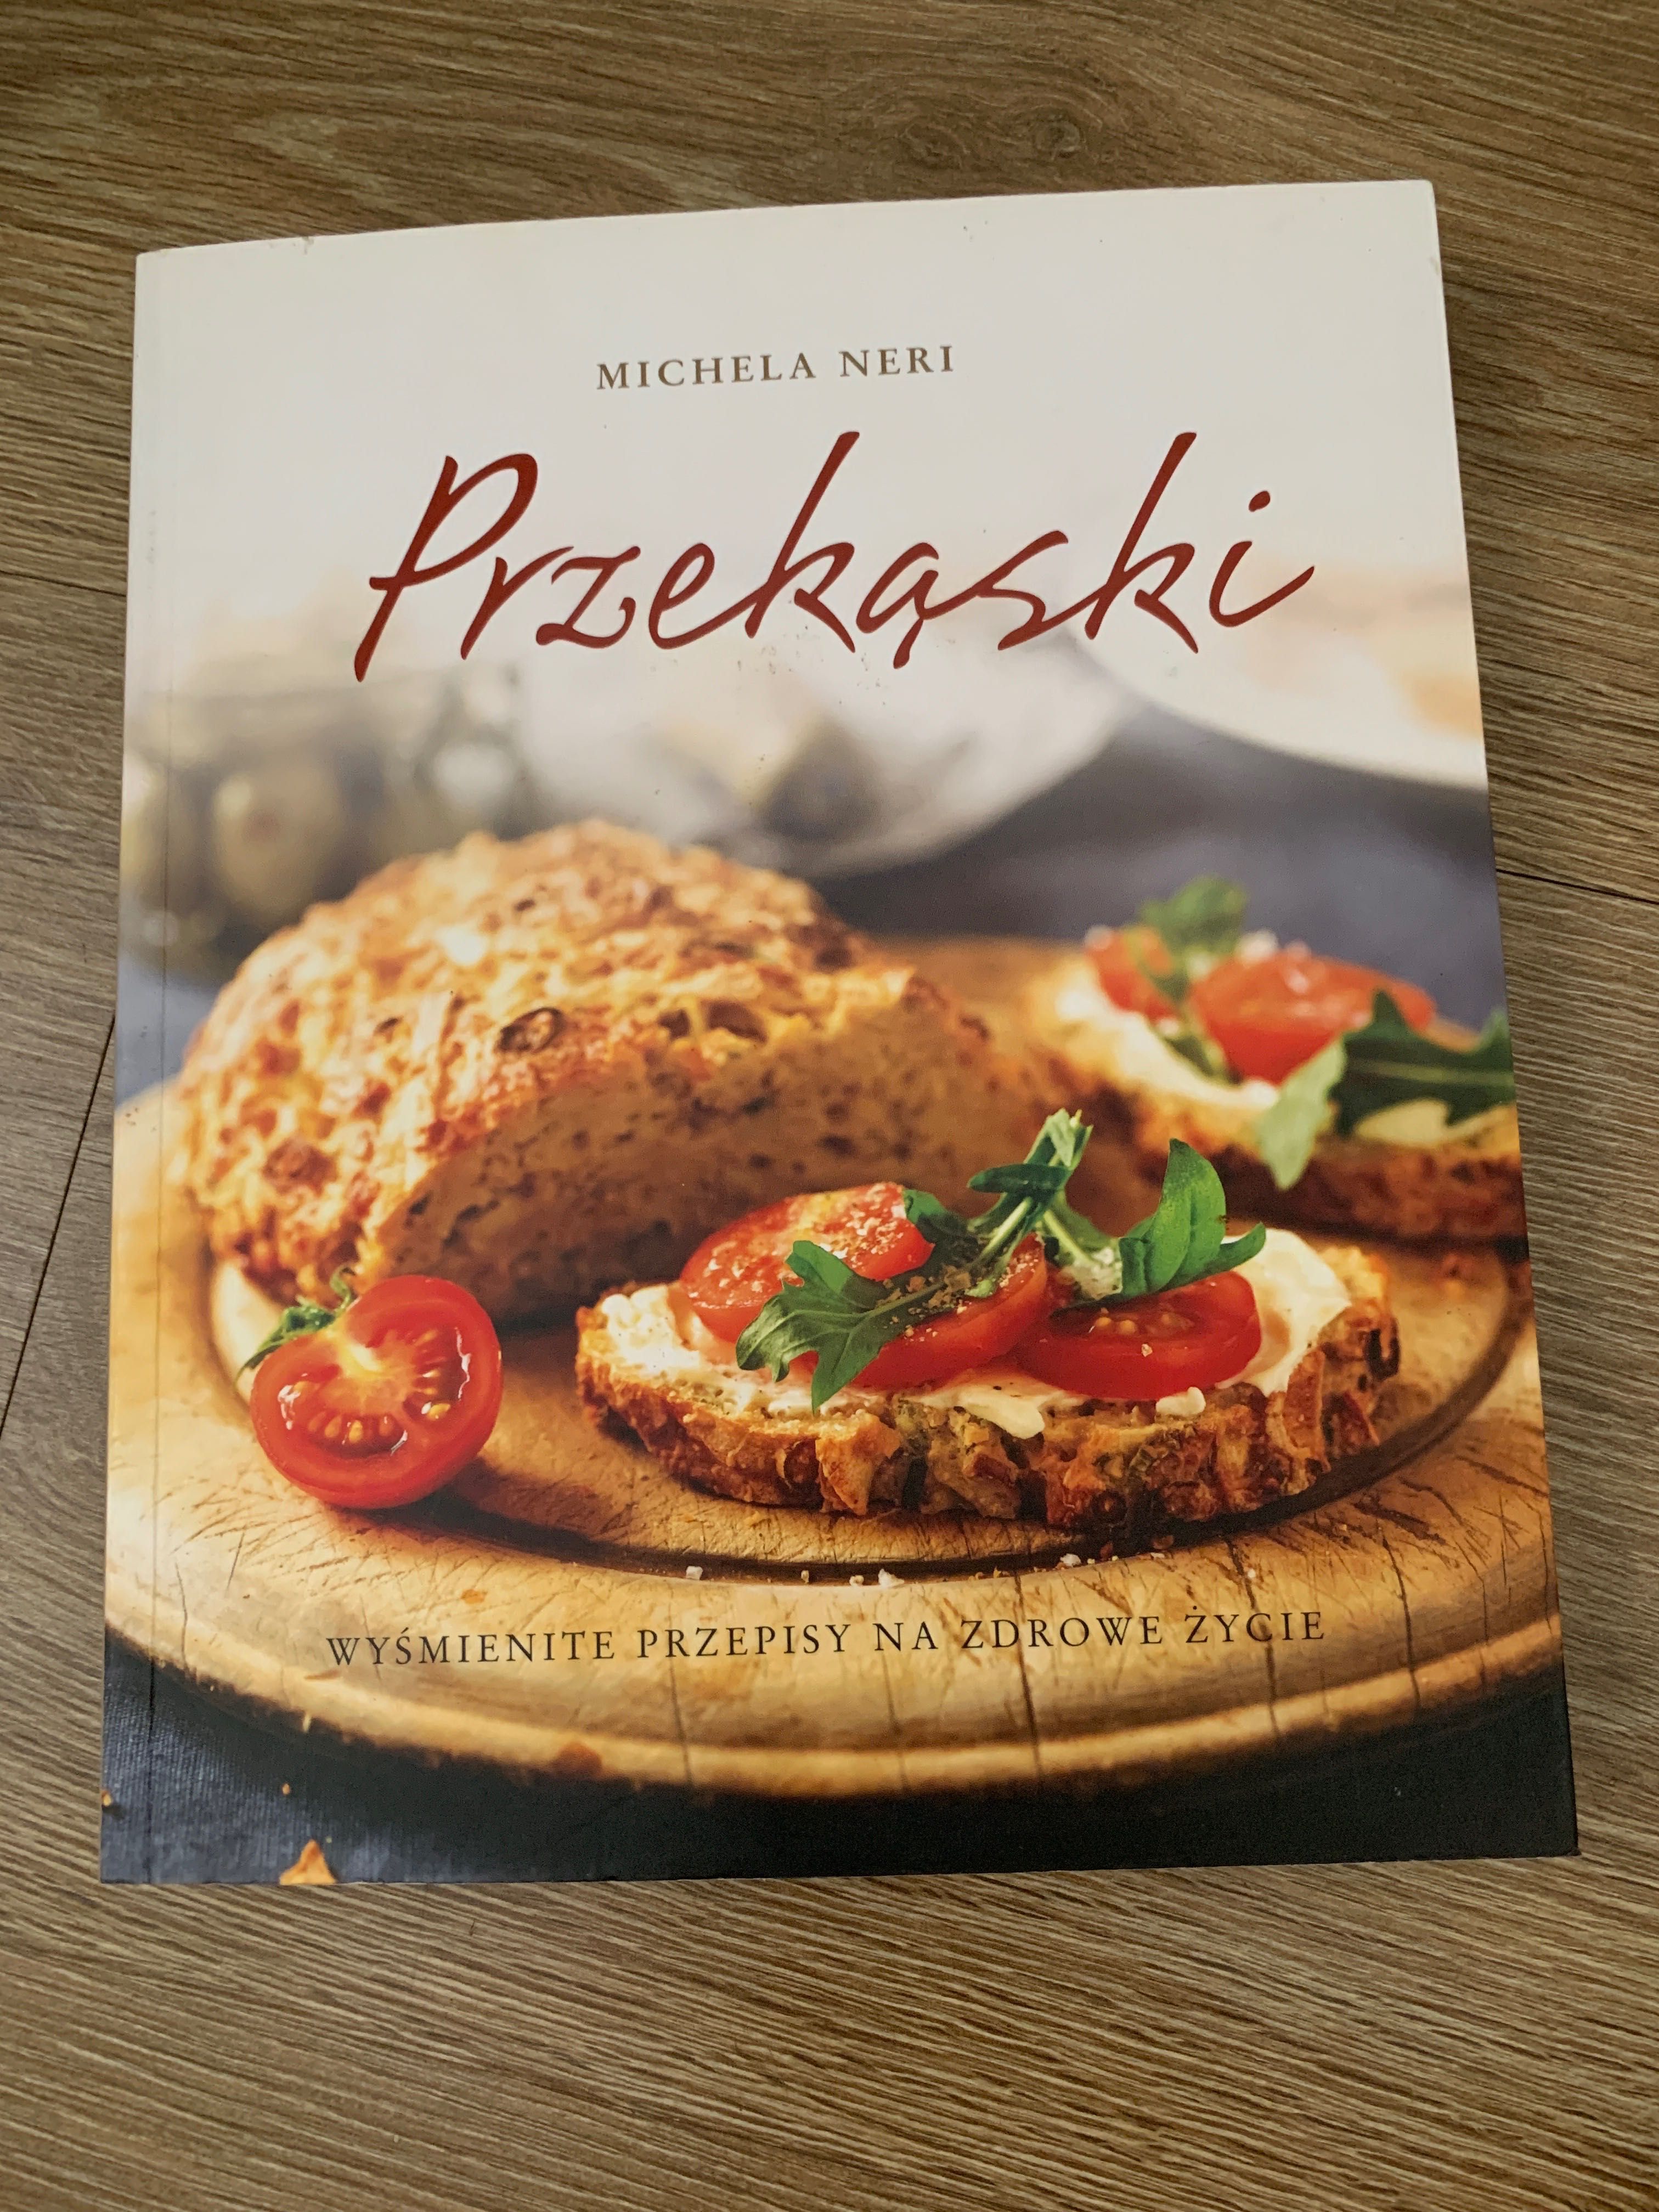 Książka kucharska  "Przekąski" Michaela Neri